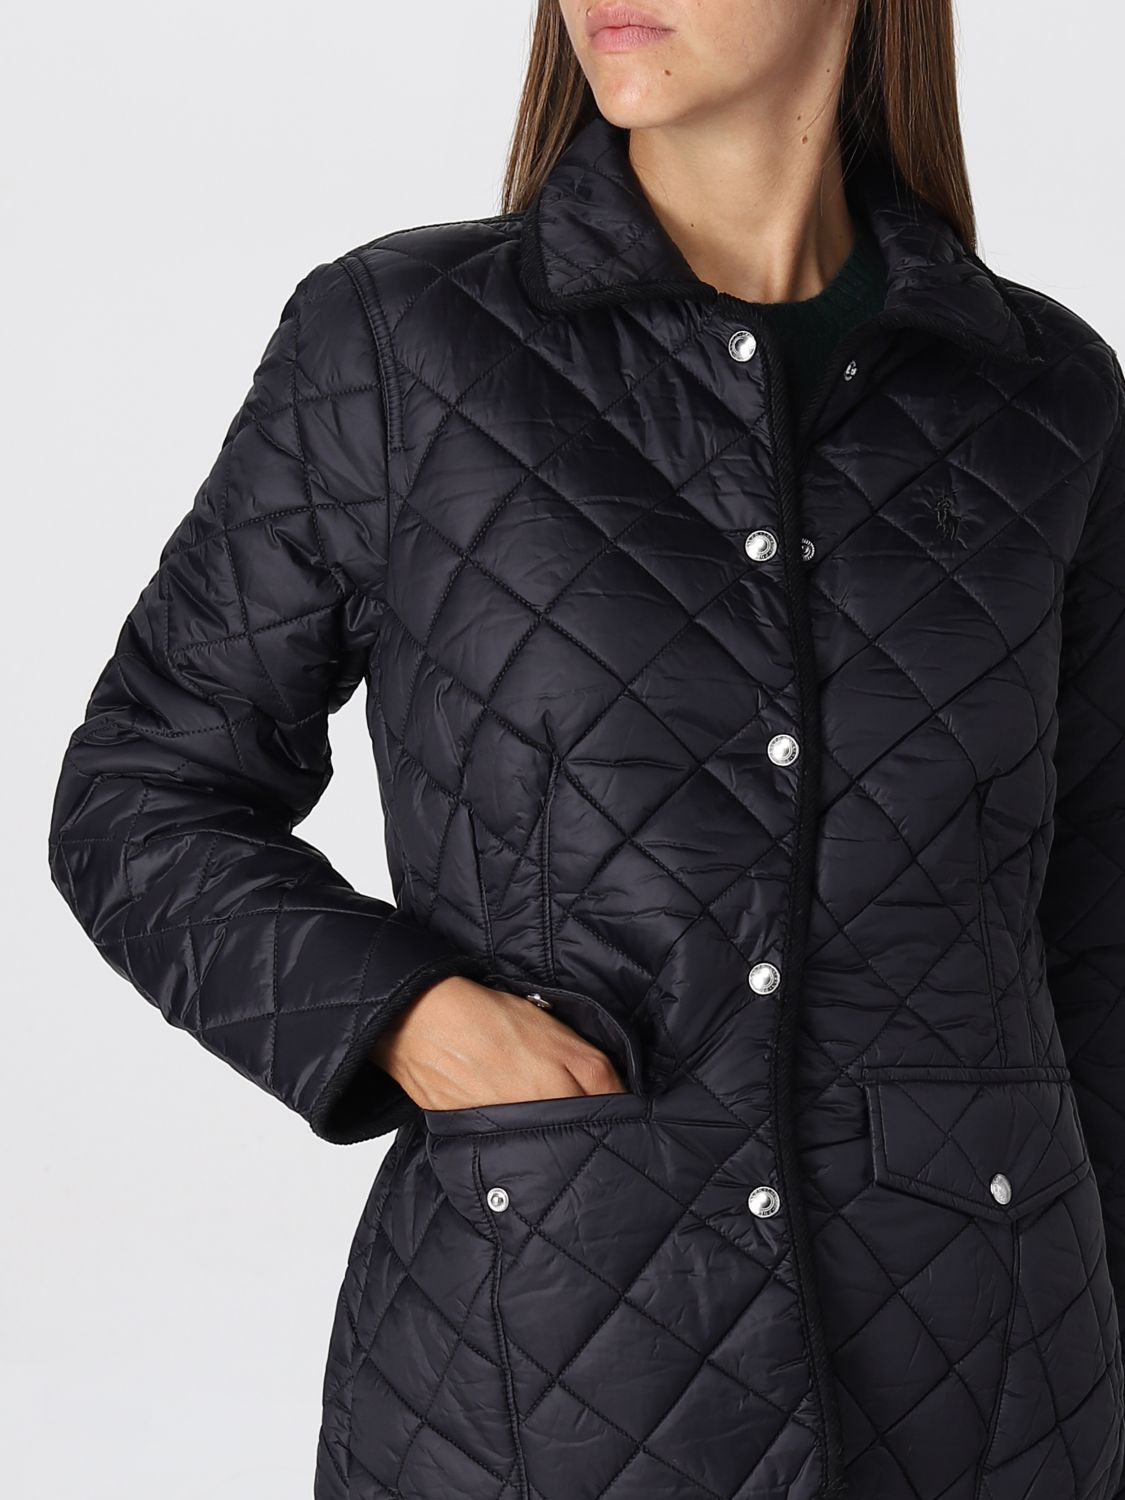 POLO RALPH LAUREN: jacket for woman - Black | Polo Ralph Lauren jacket ...